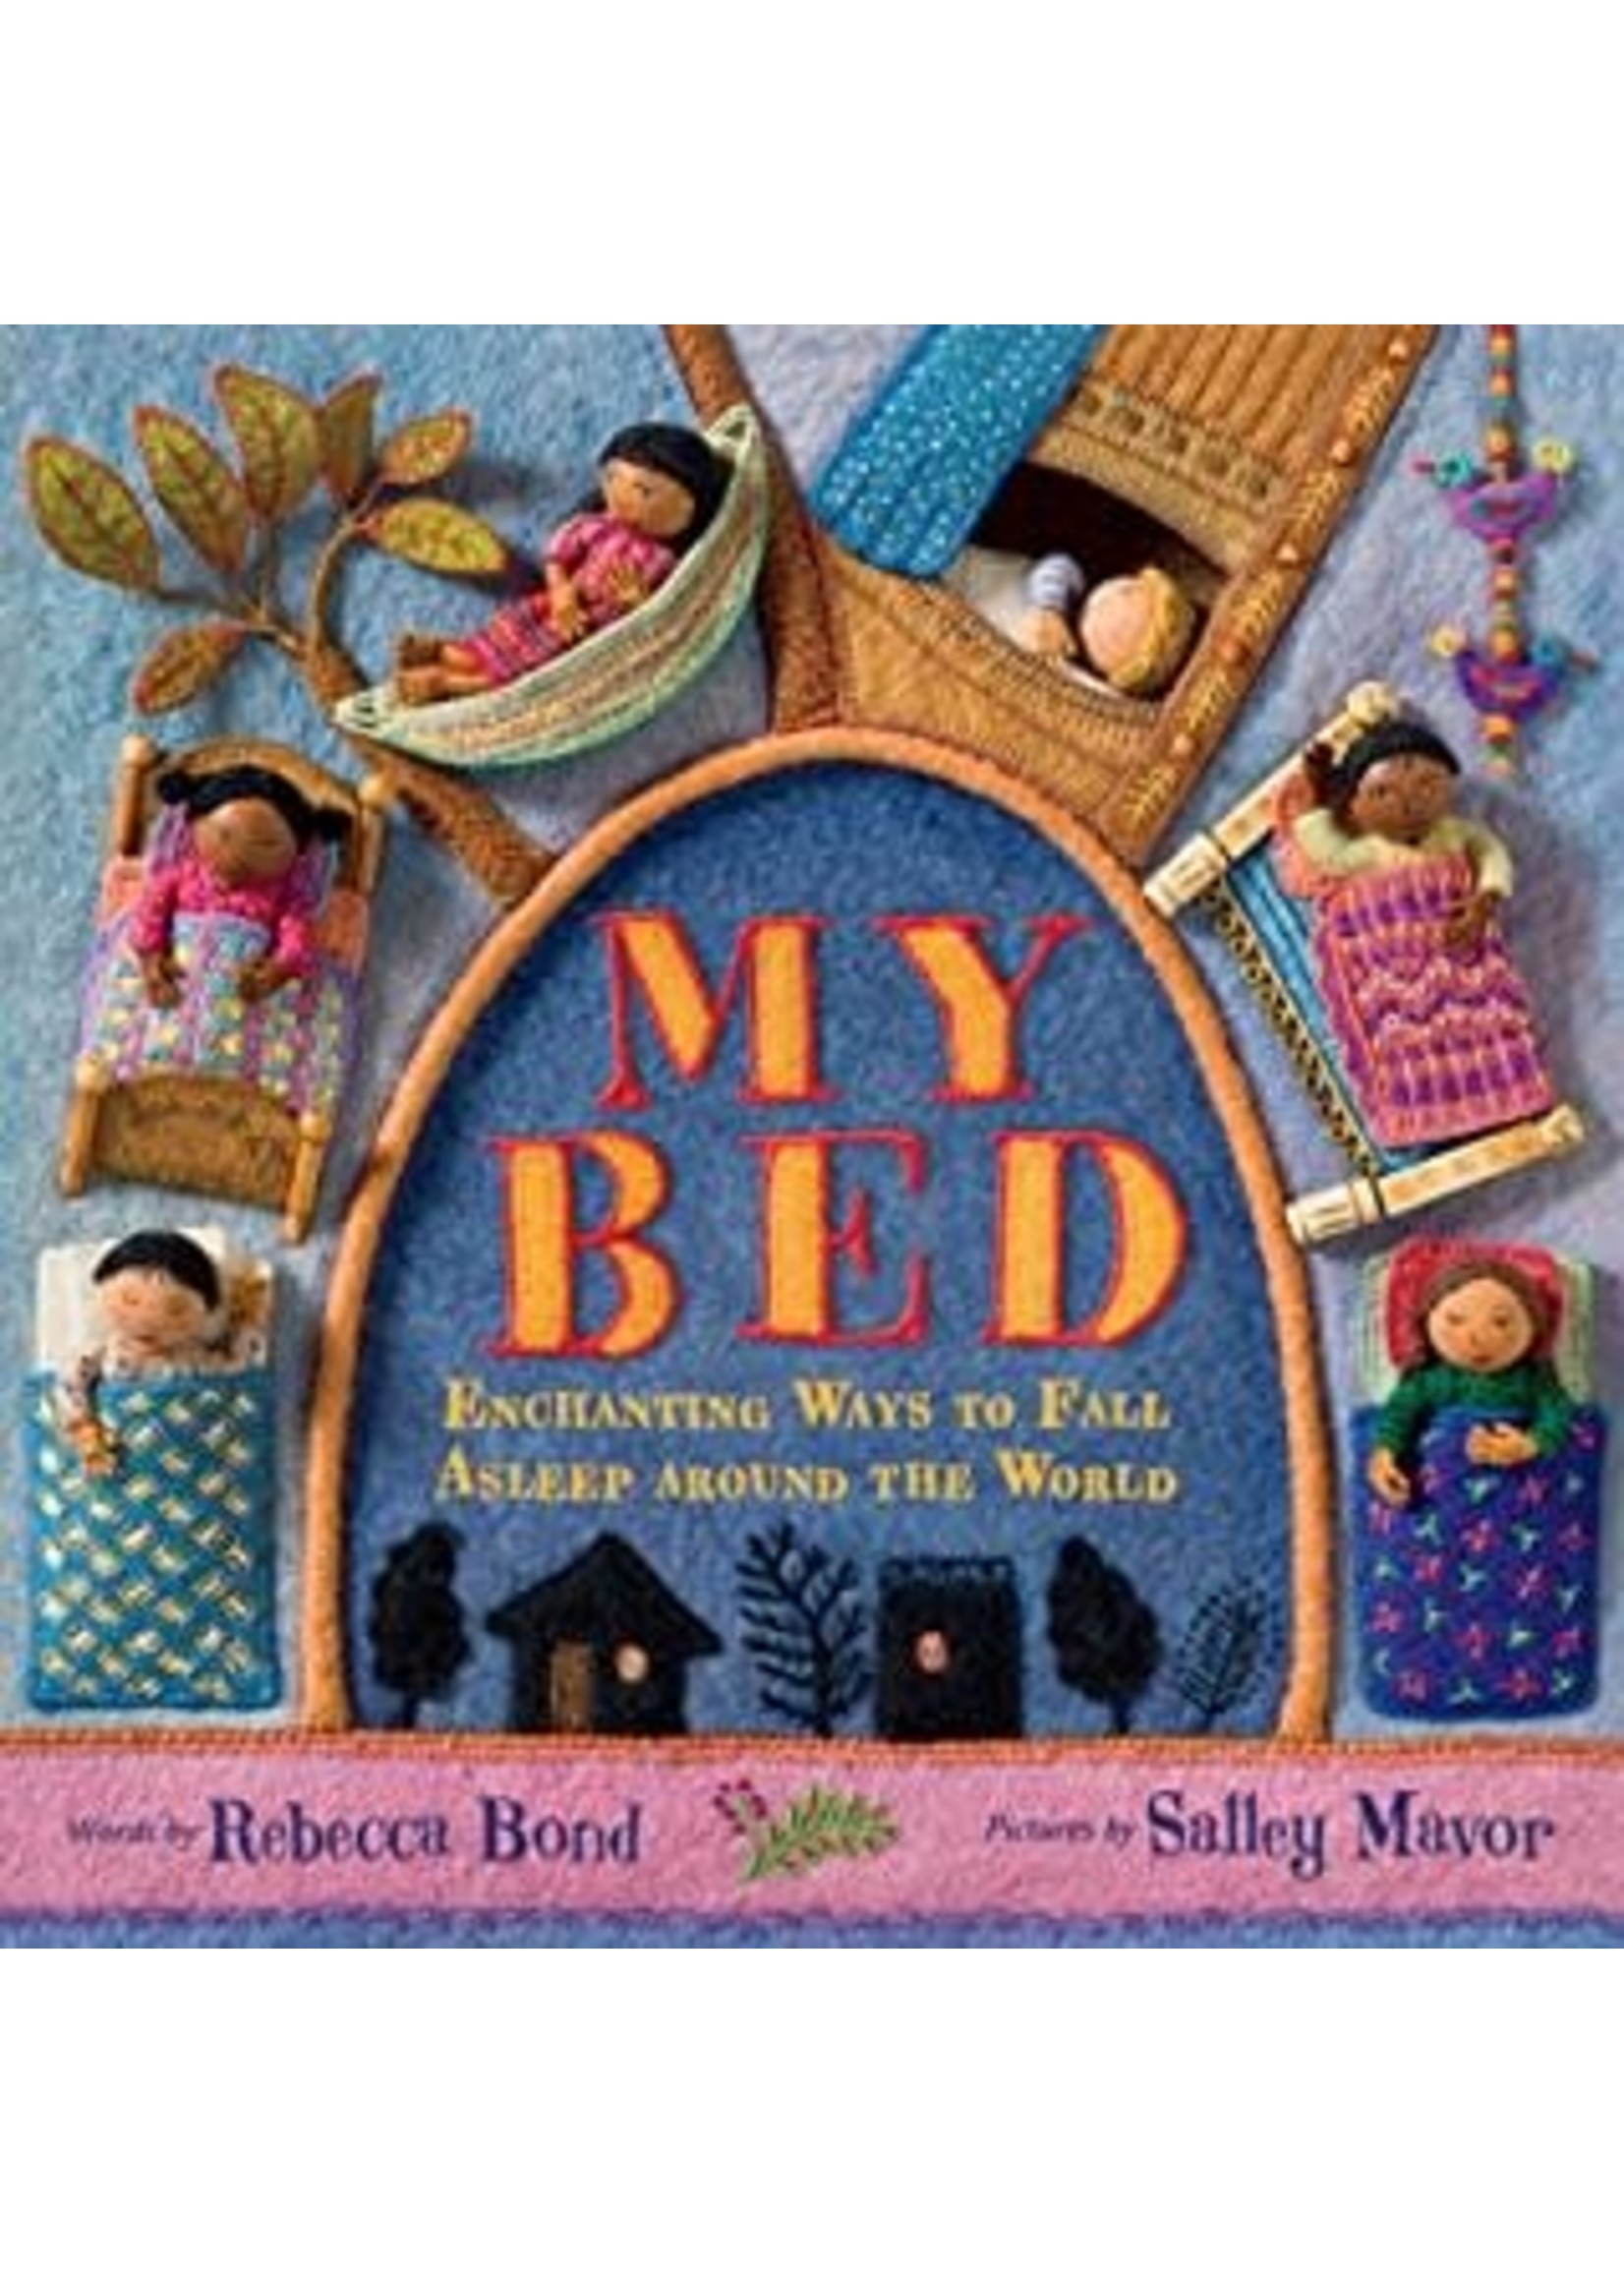 My Bed: Enchanting Ways to Fall Asleep Around the World by Rebecca Bond, Salley Mavor